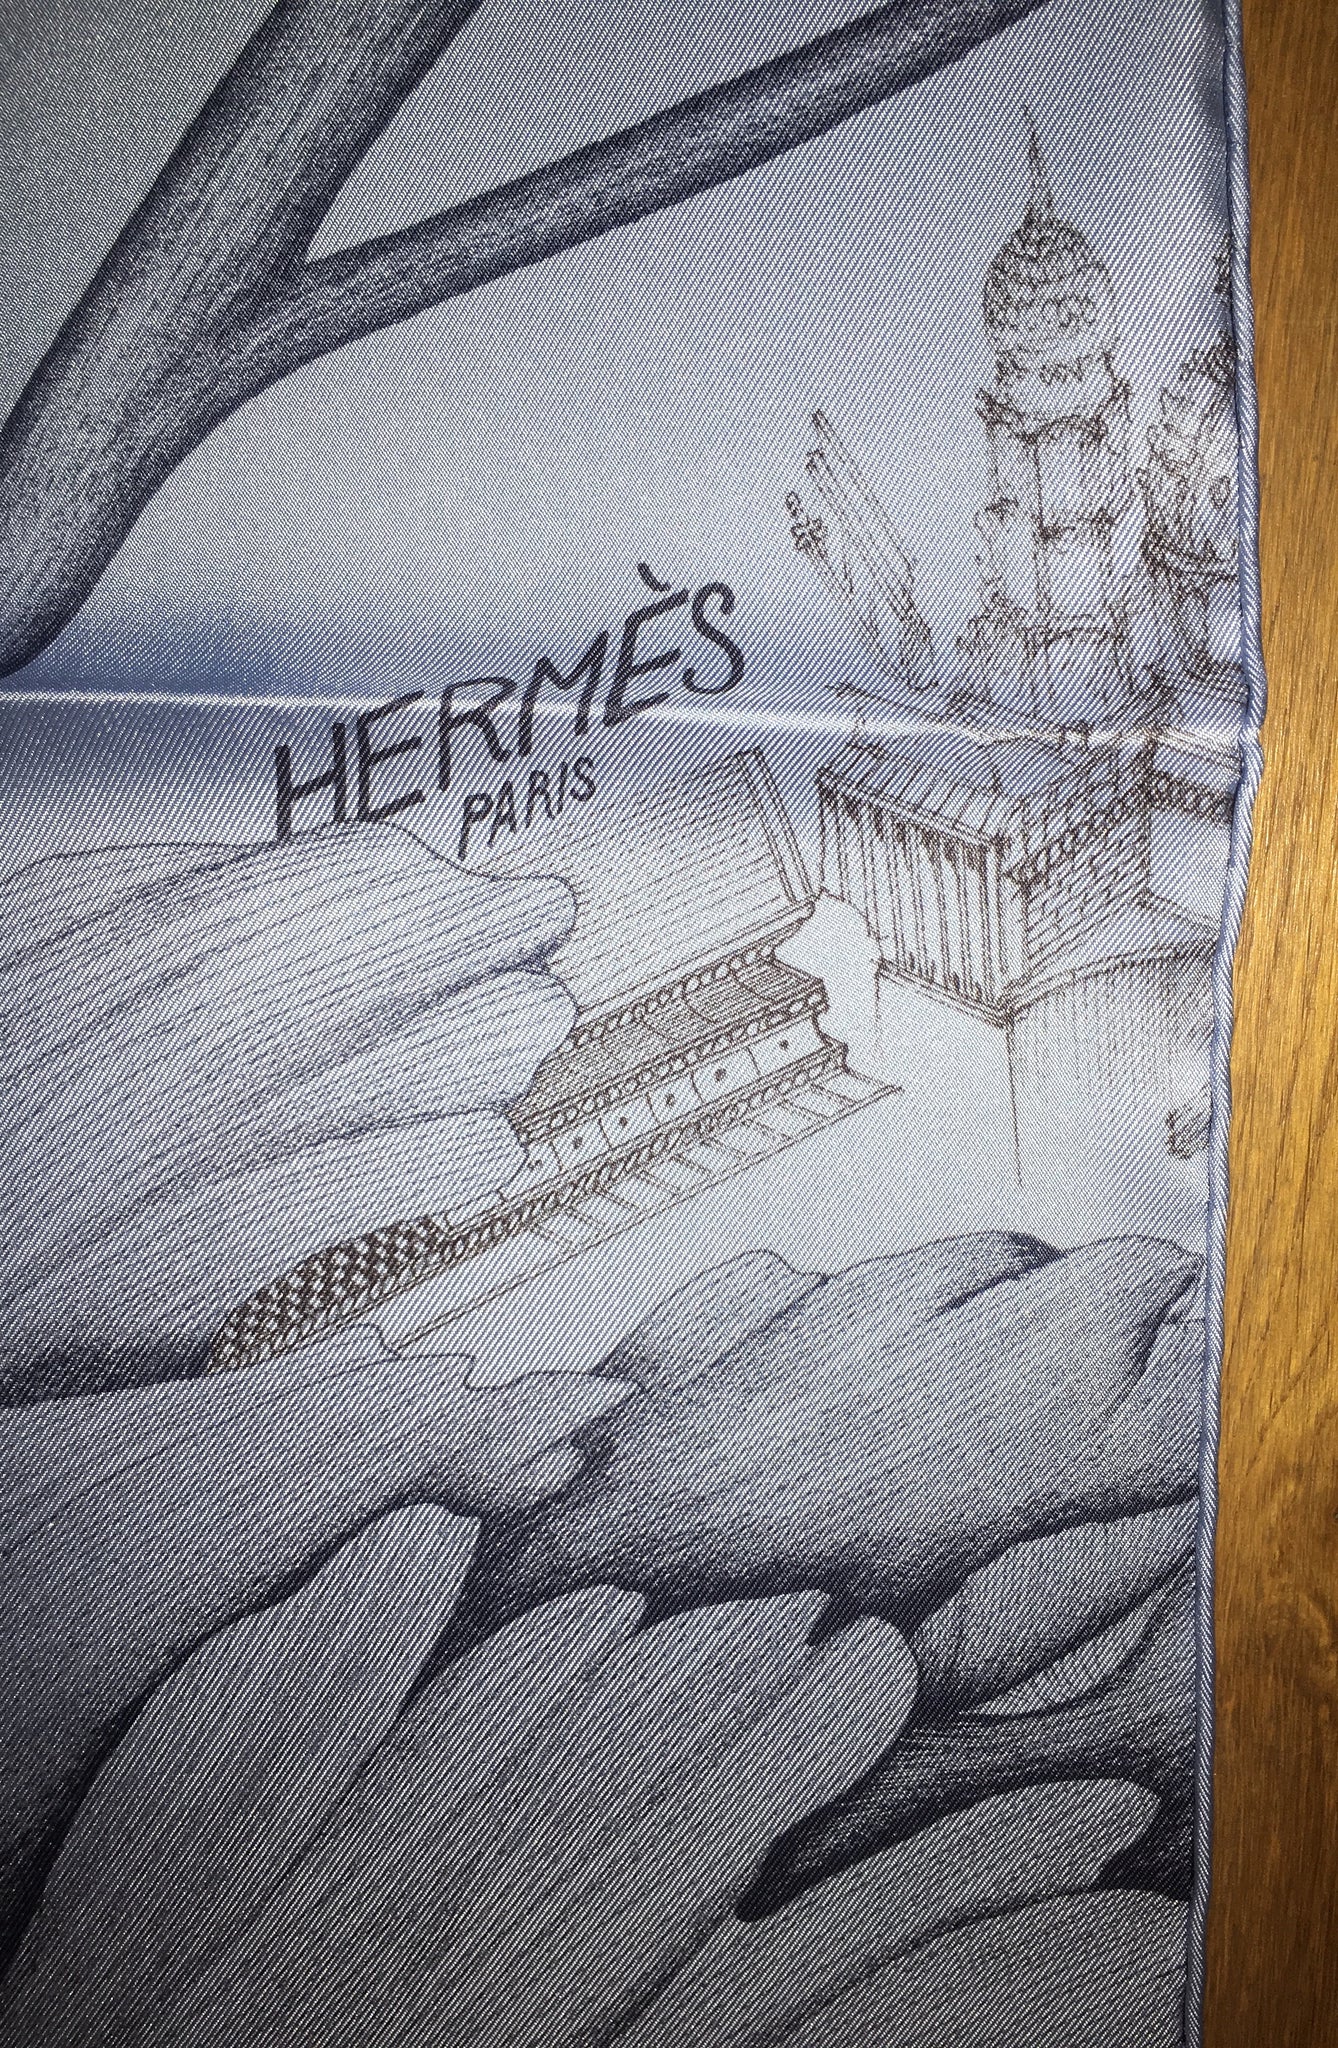 Hermes Silk Scarf A l'Ombre des Pivoines. Designed by Octave Marsal/ –  Hermes Emporium